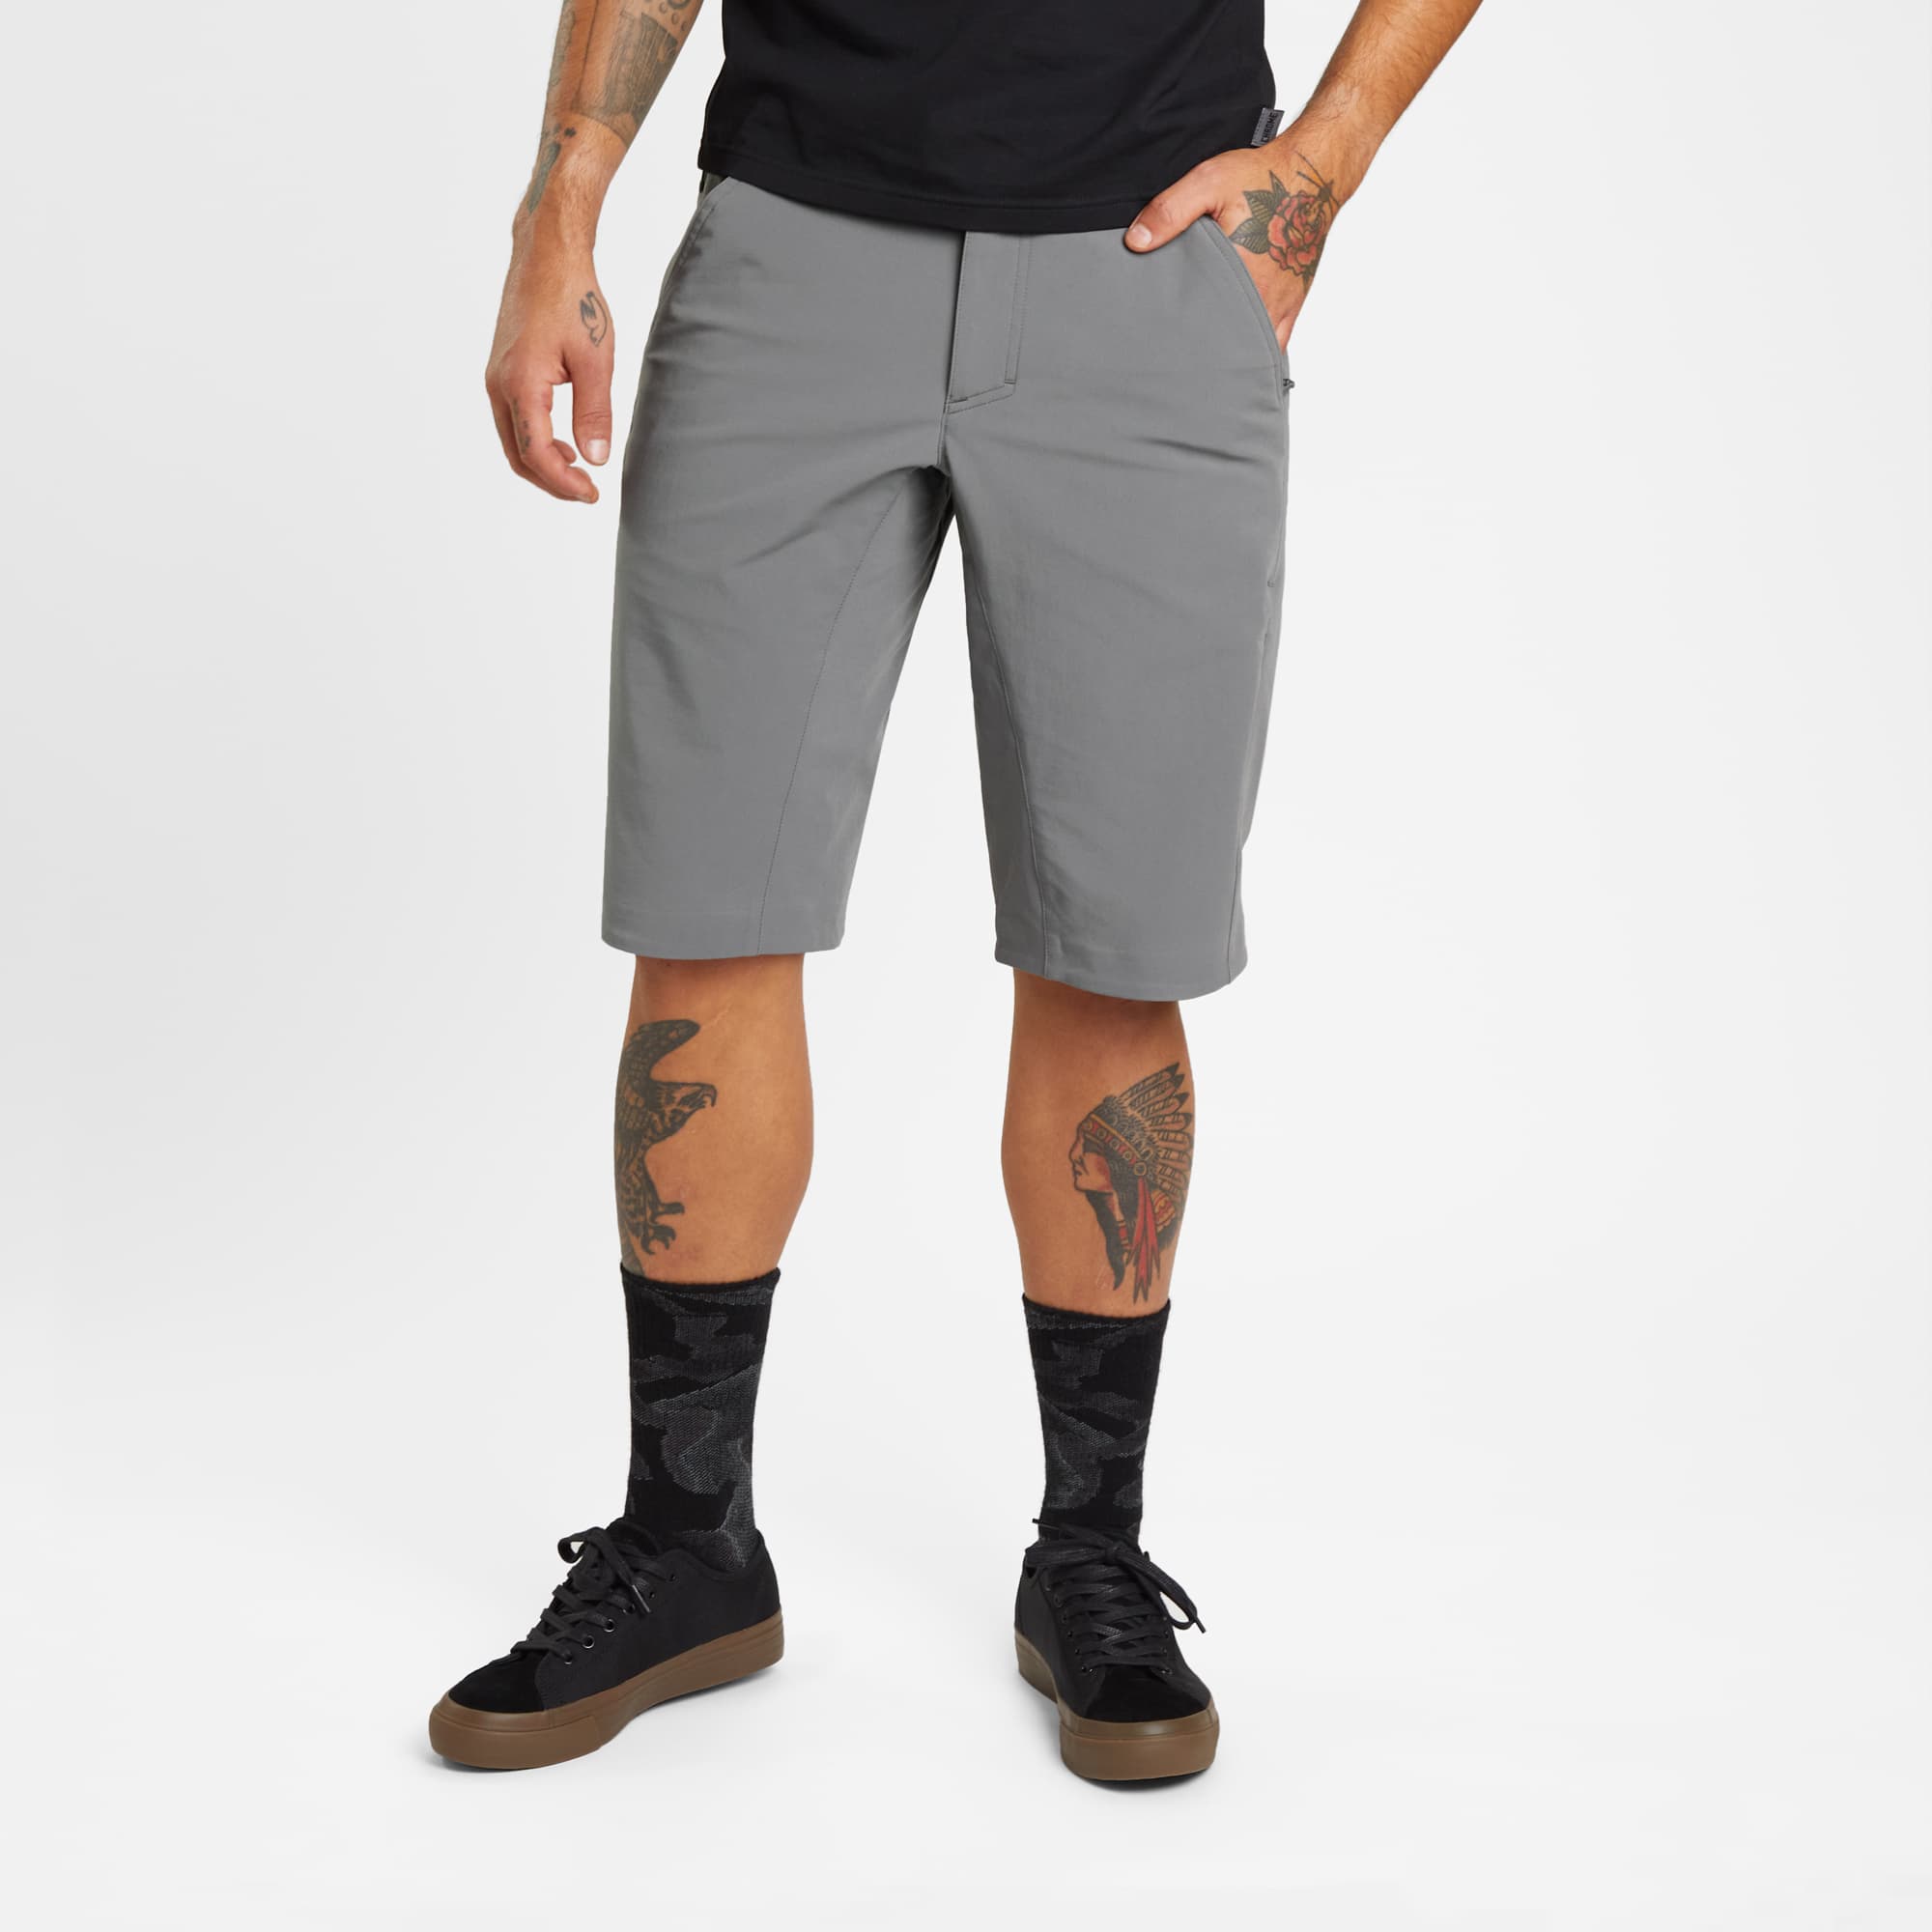 Men's tech Sutro Short in grey worn by a man #color_castle rock